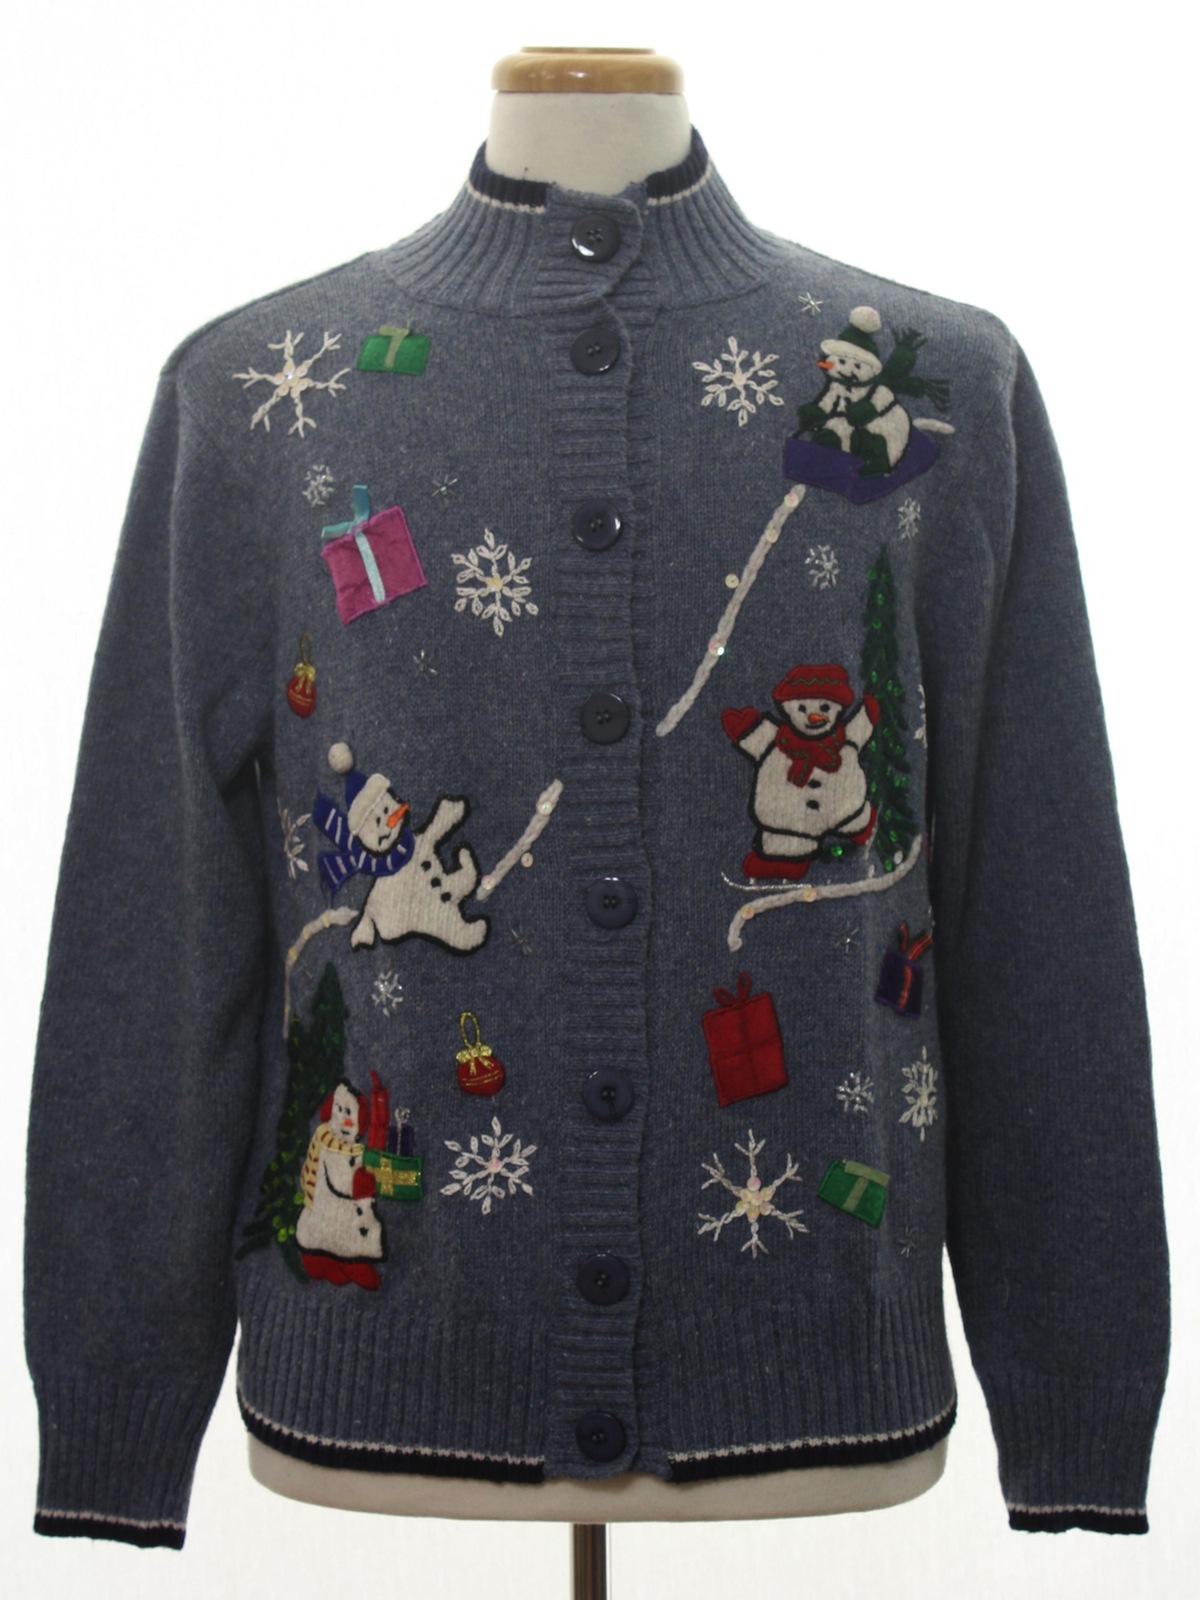 Ugly Christmas Sweater: -Reference Point- Unisex hazy blue background ...